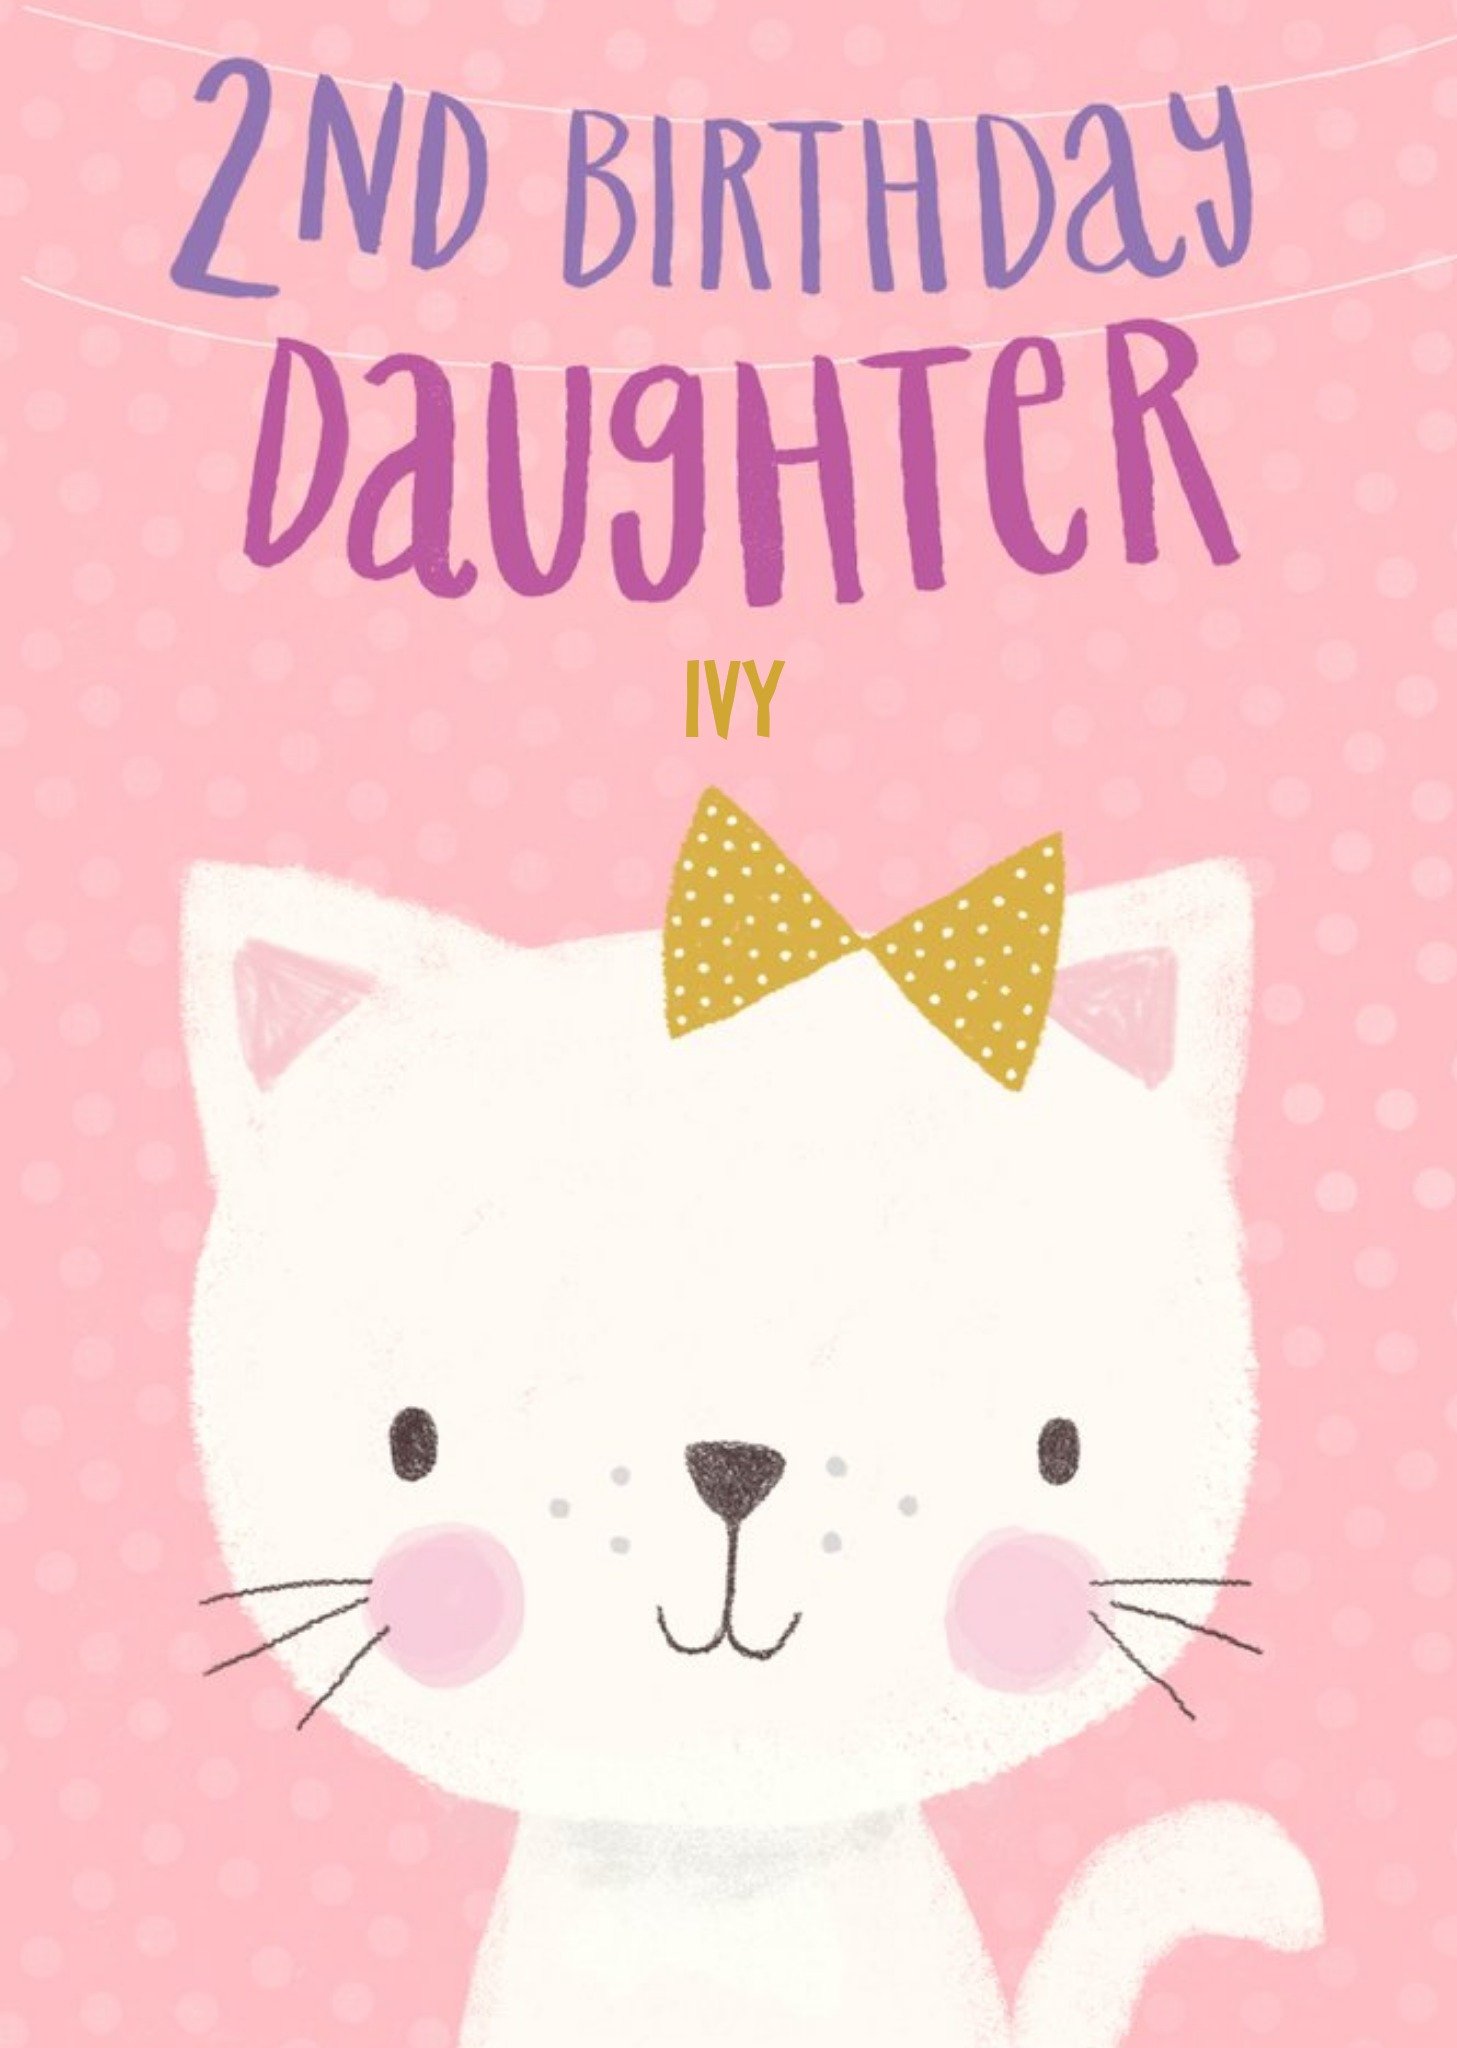 Moonpig Cute Illustrative Cat 2nd Birthday Daughter Card , Large